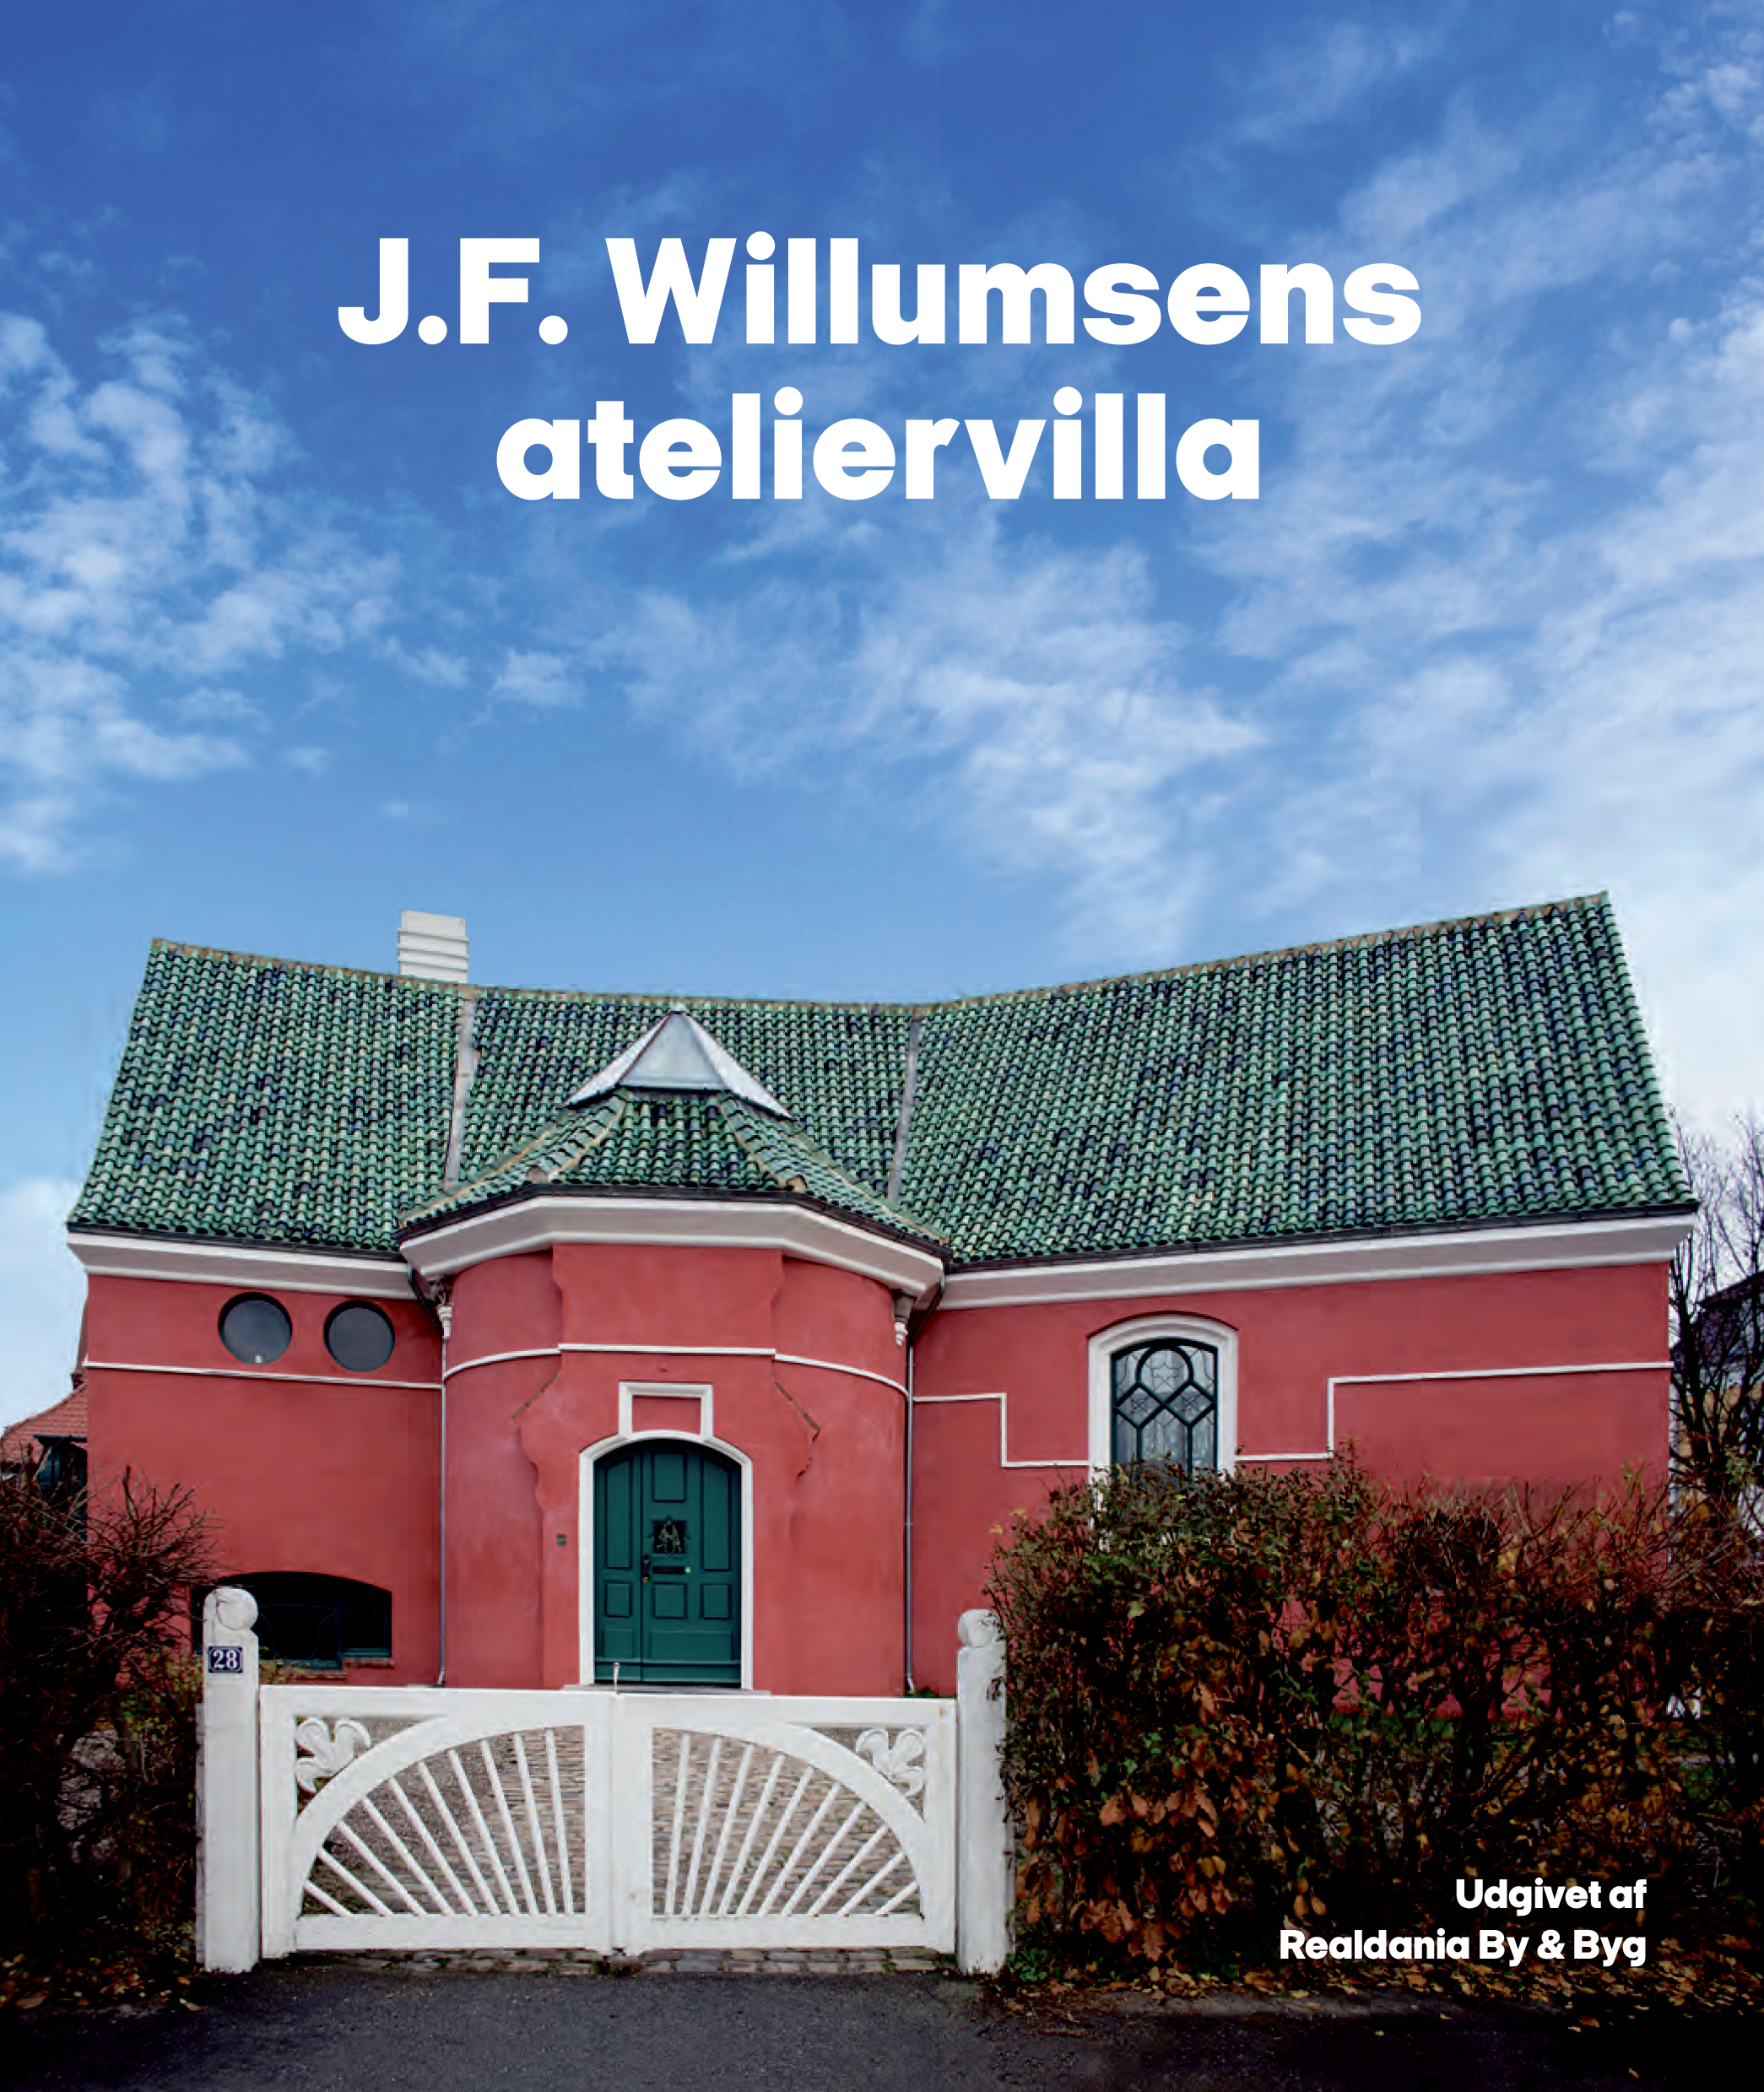 J.F. Willumsens ateliervilla i Hellerup